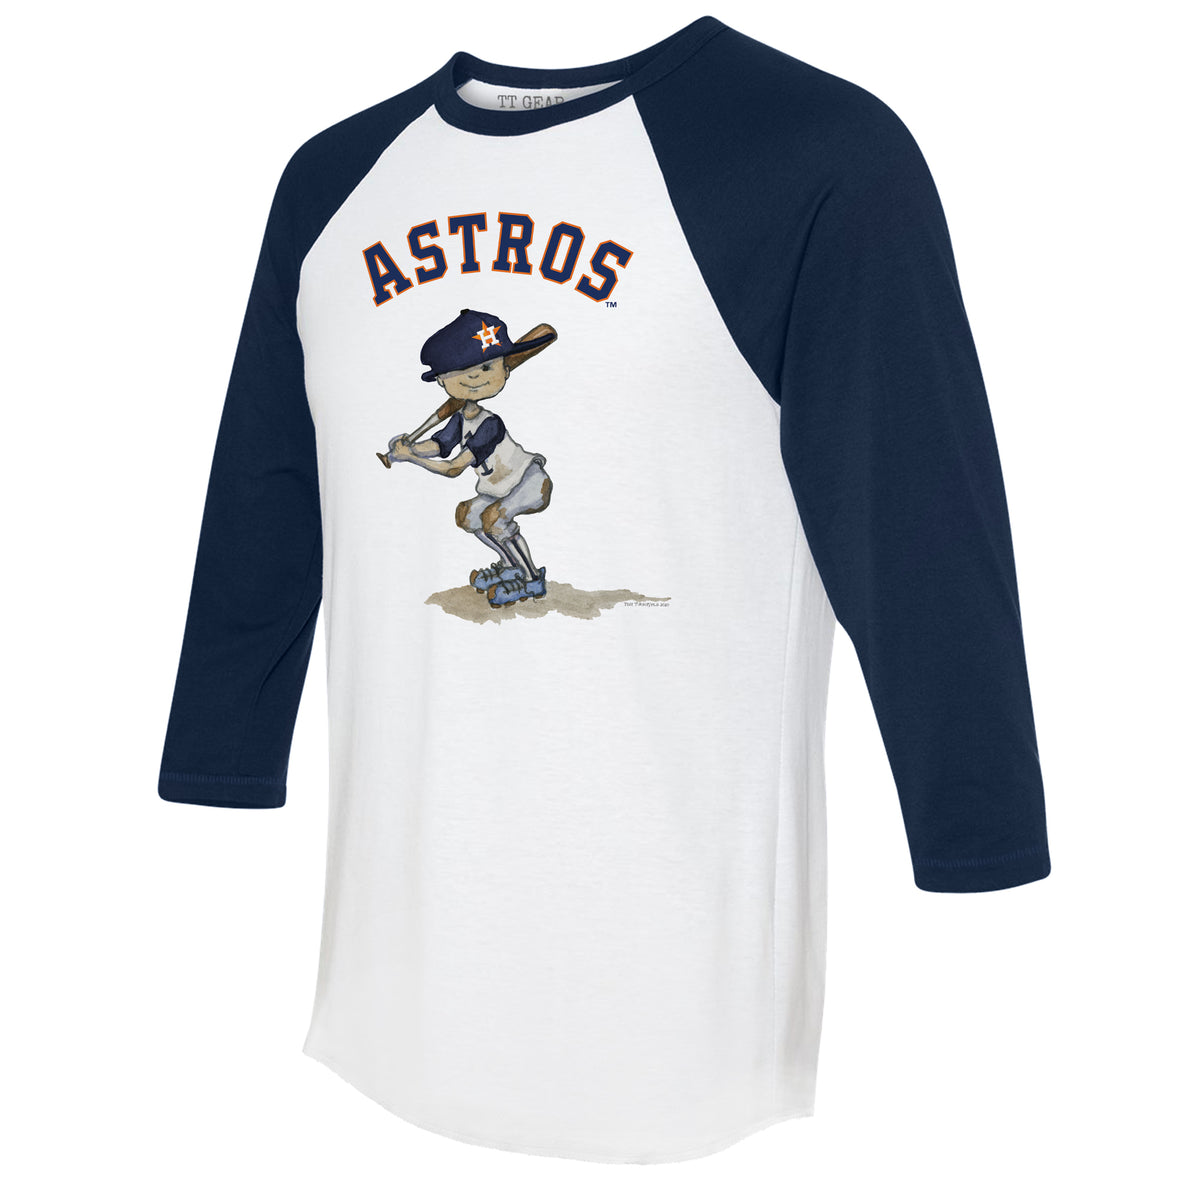 Houston Astros TT Rex Tee Shirt 3T / Navy Blue